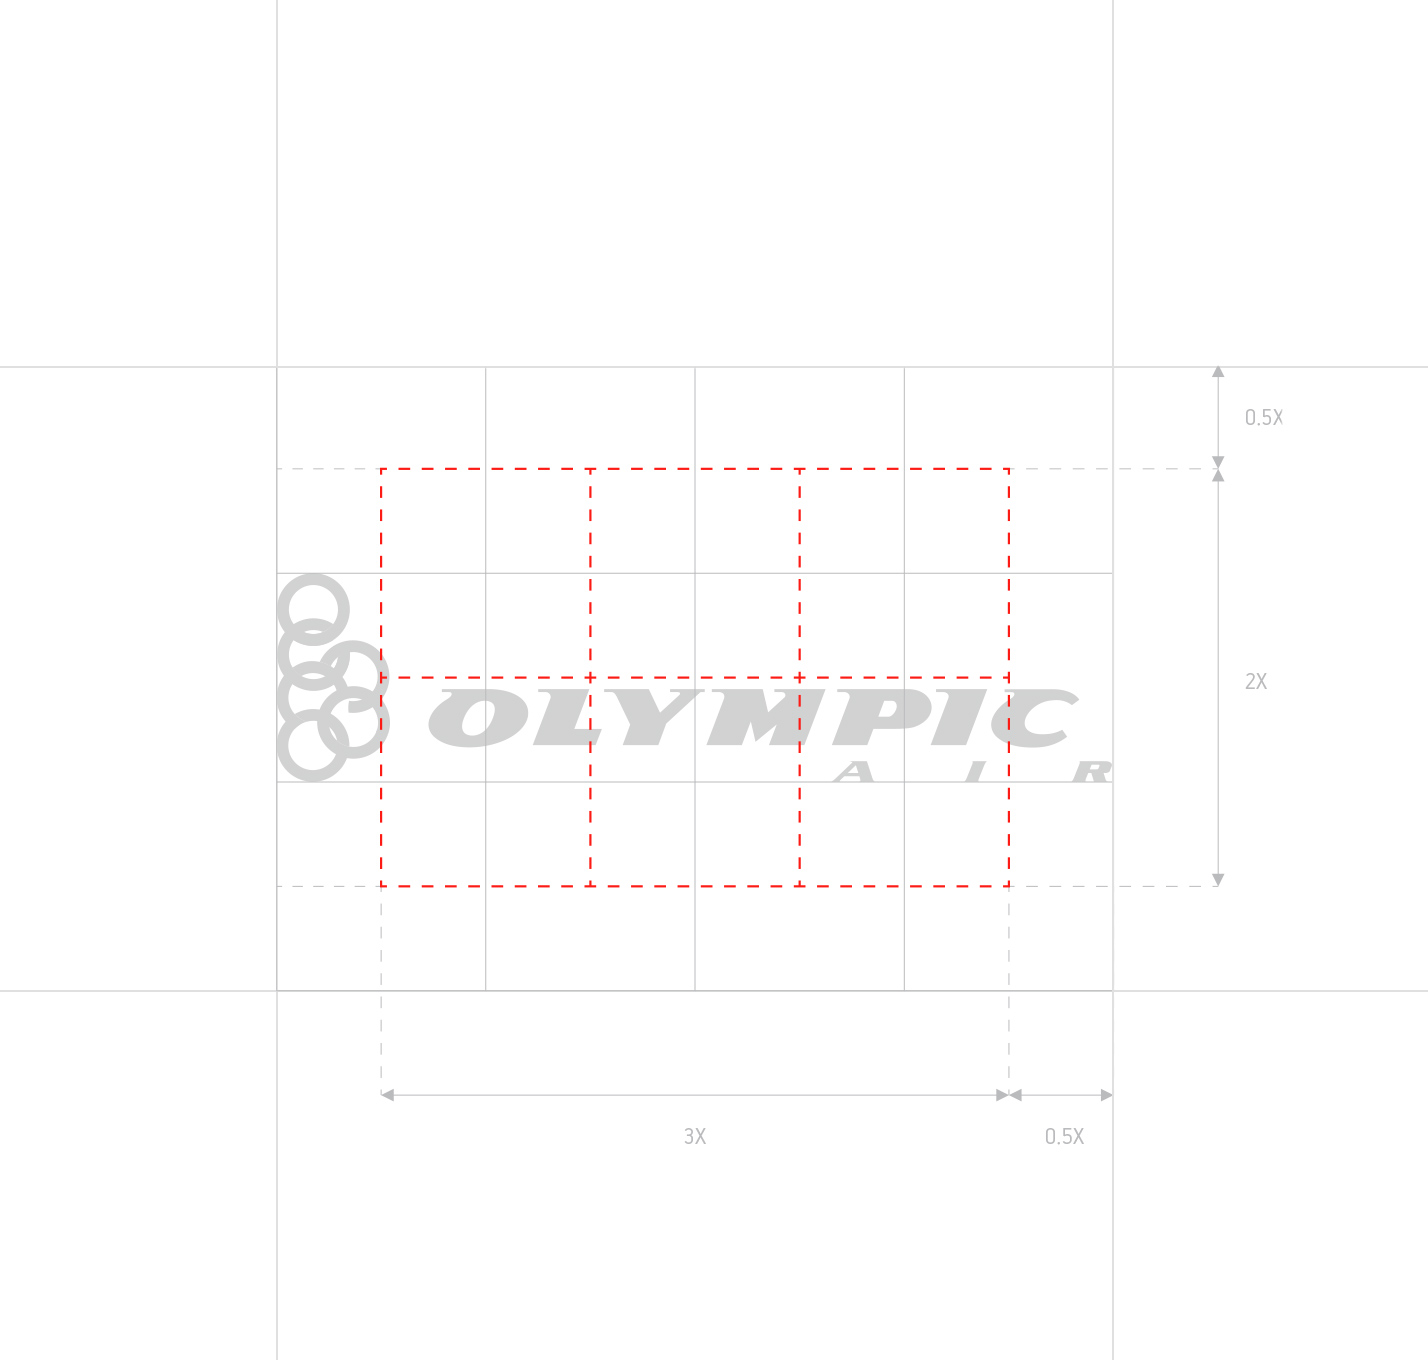 aegean air branding olympic air full logo grid kommigraphics